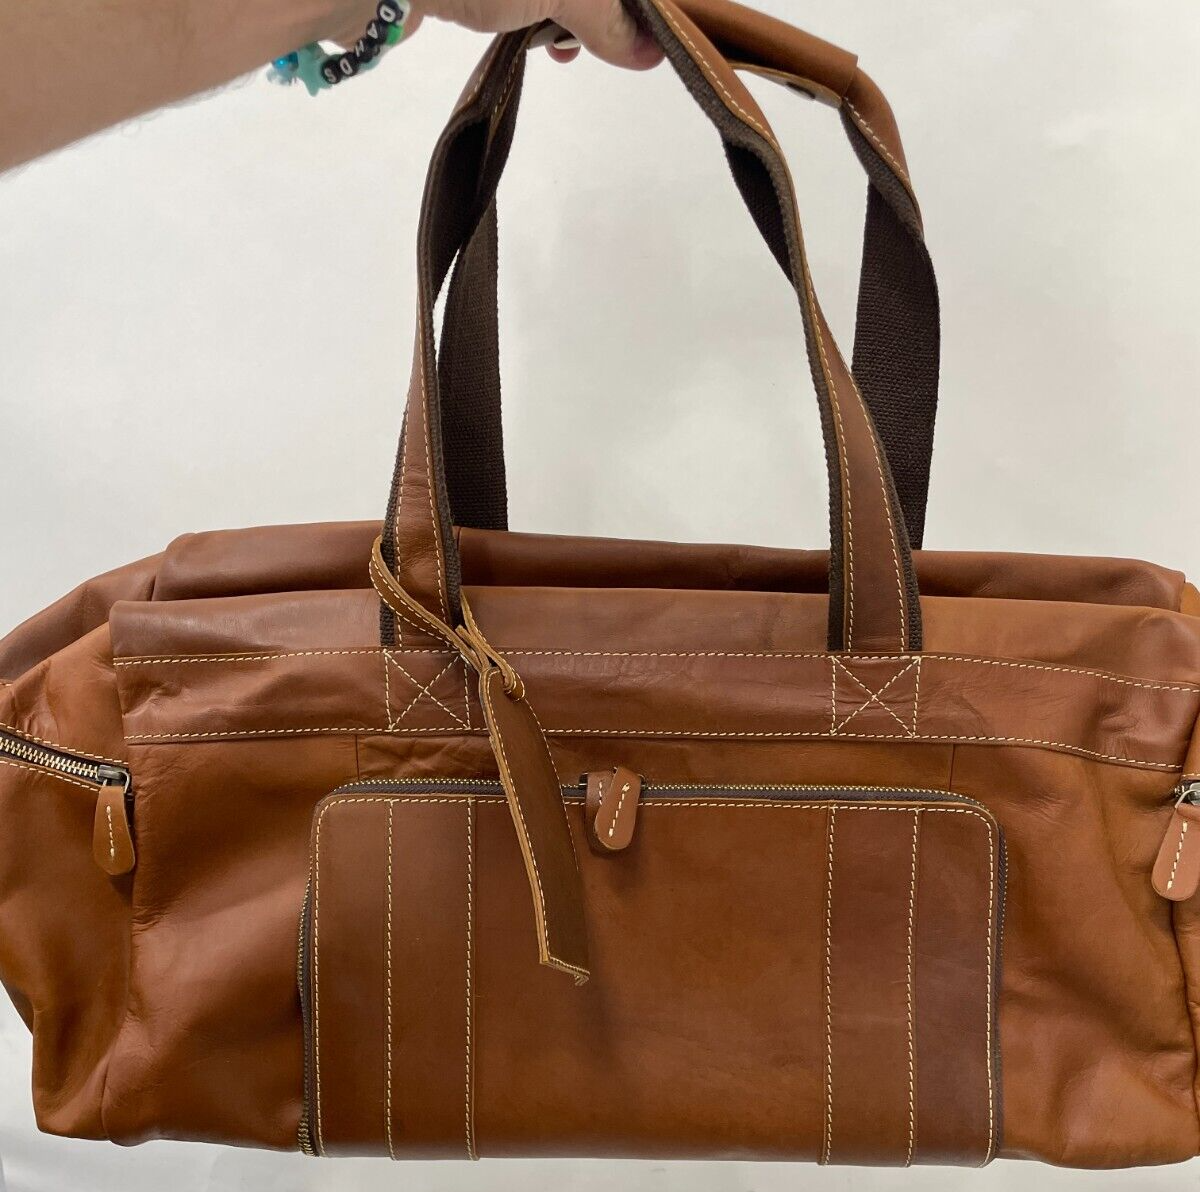 Viosi Genuine Leather Travel Duffel Bag Oversized Weekend Luggage Unisex Brown